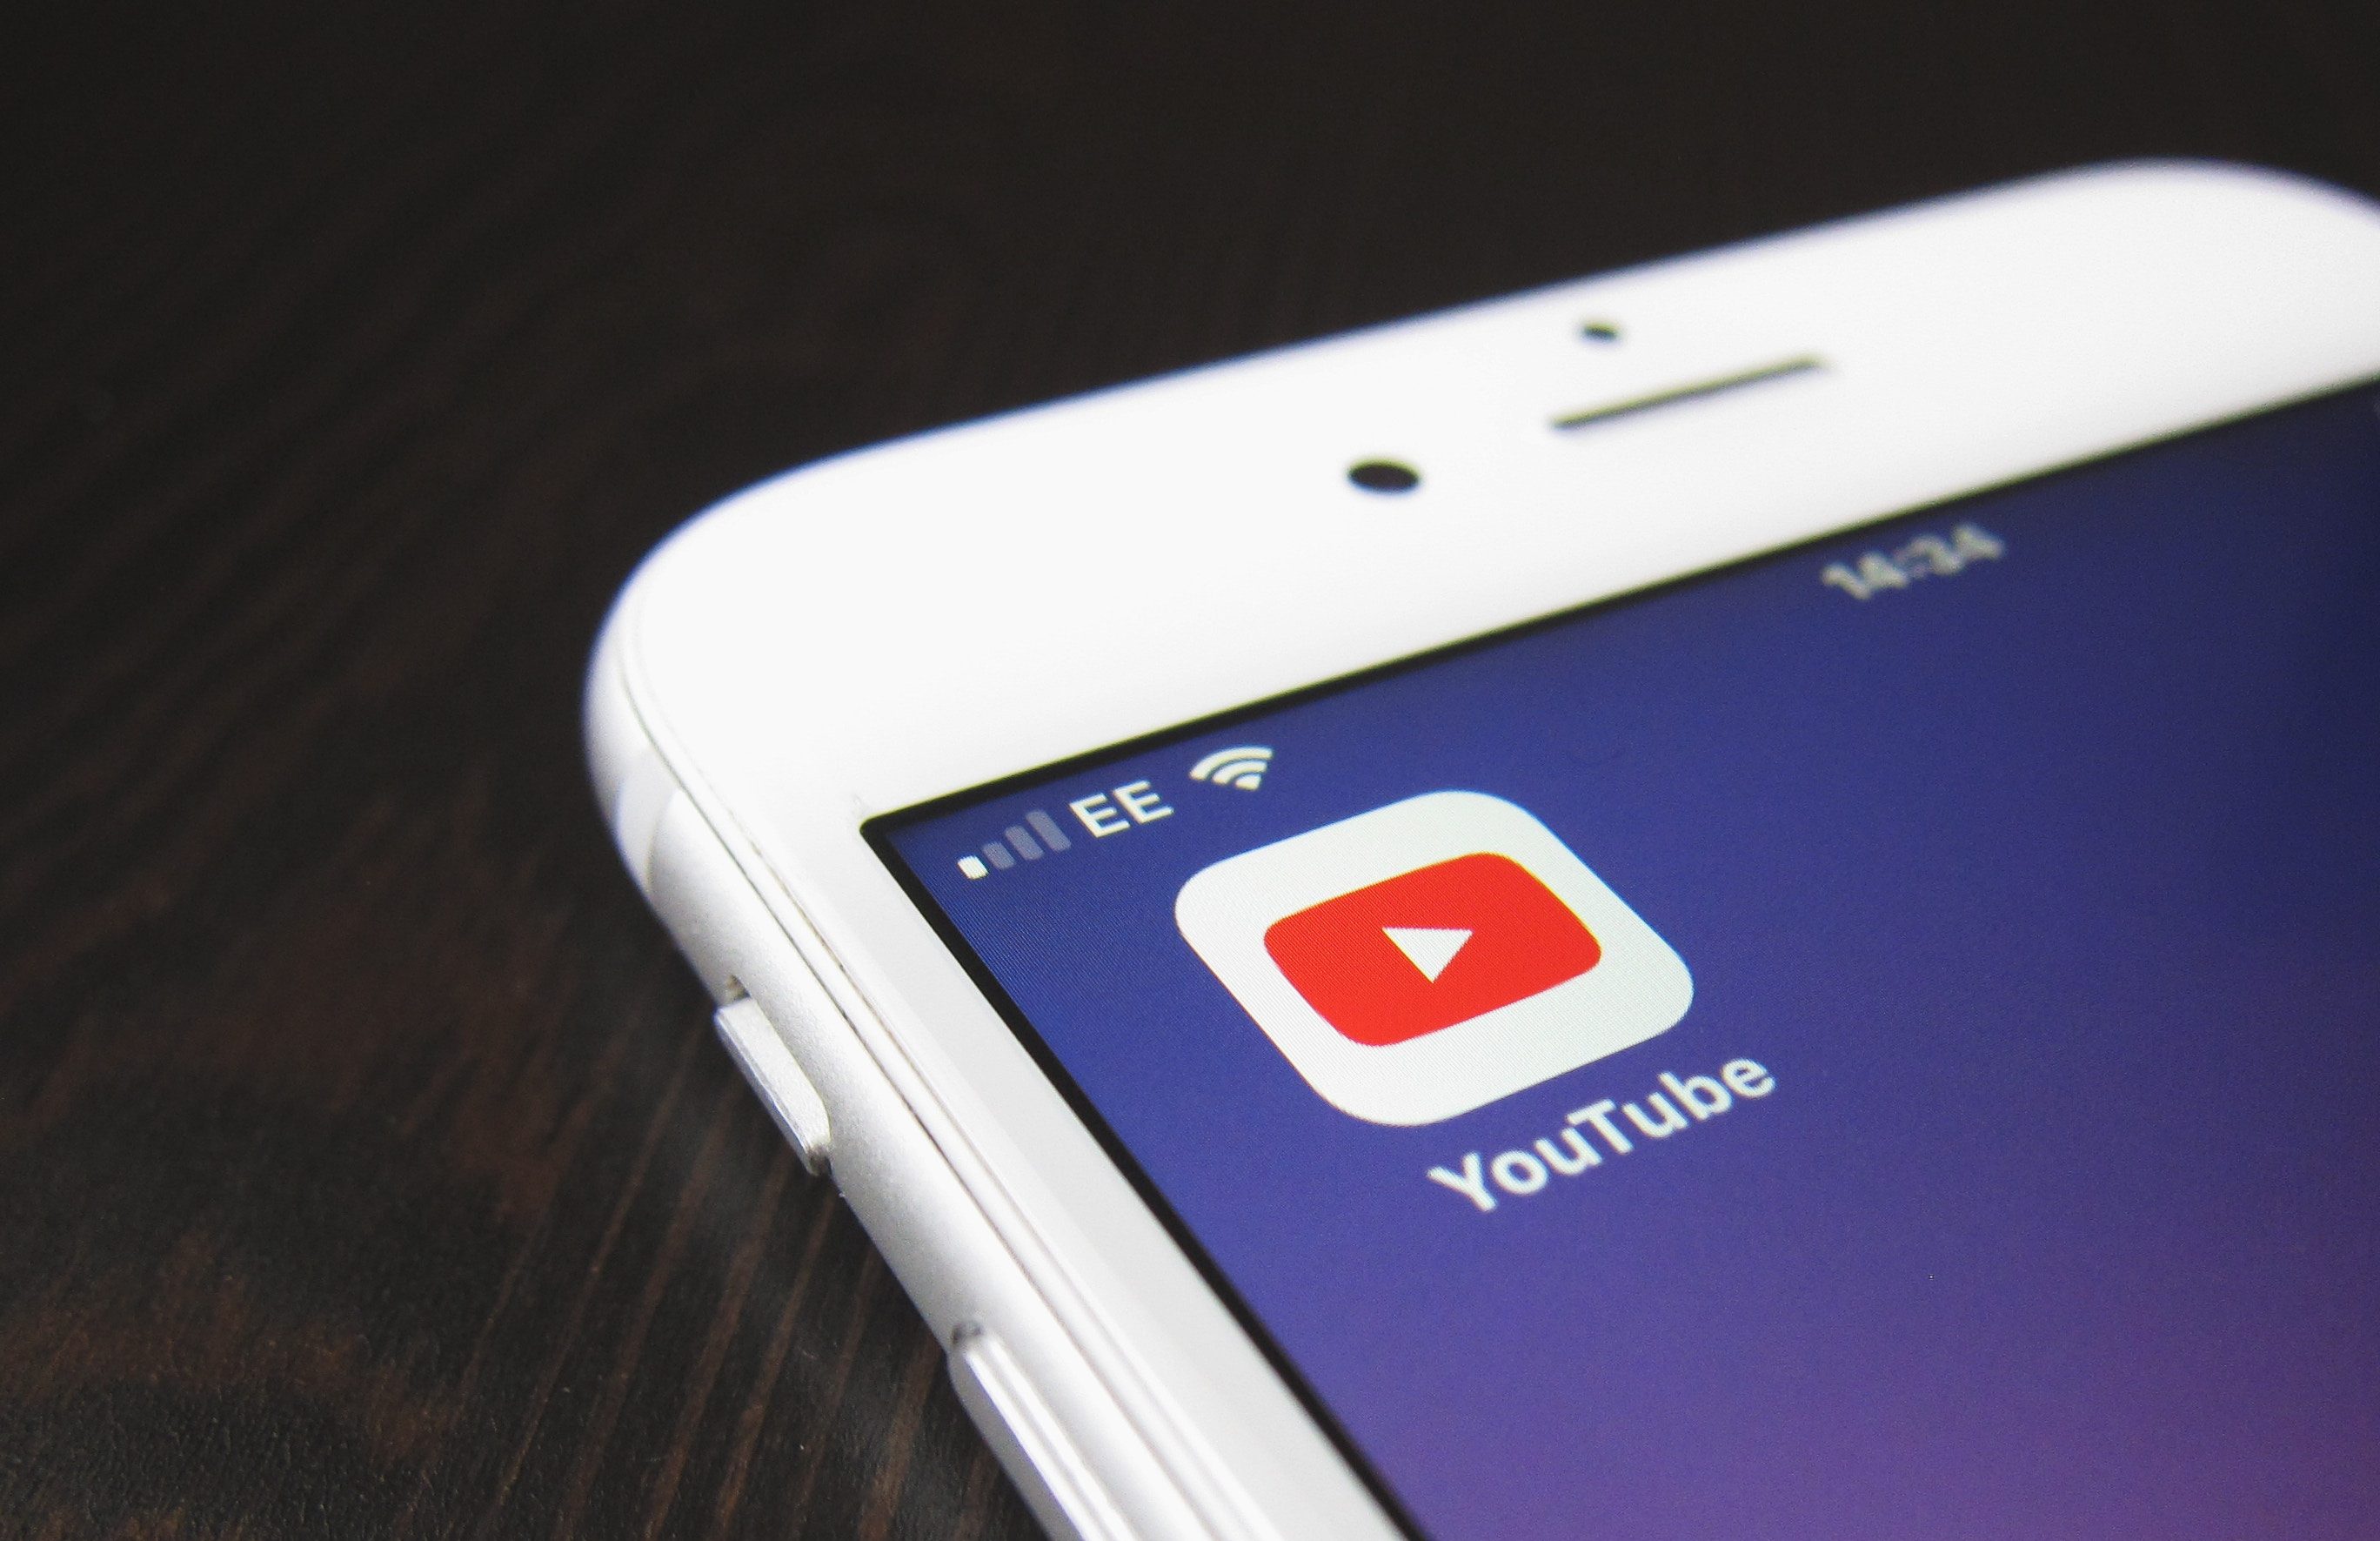 YouTube removerá vídeos de políticos que violam regras, mas analisará contexto